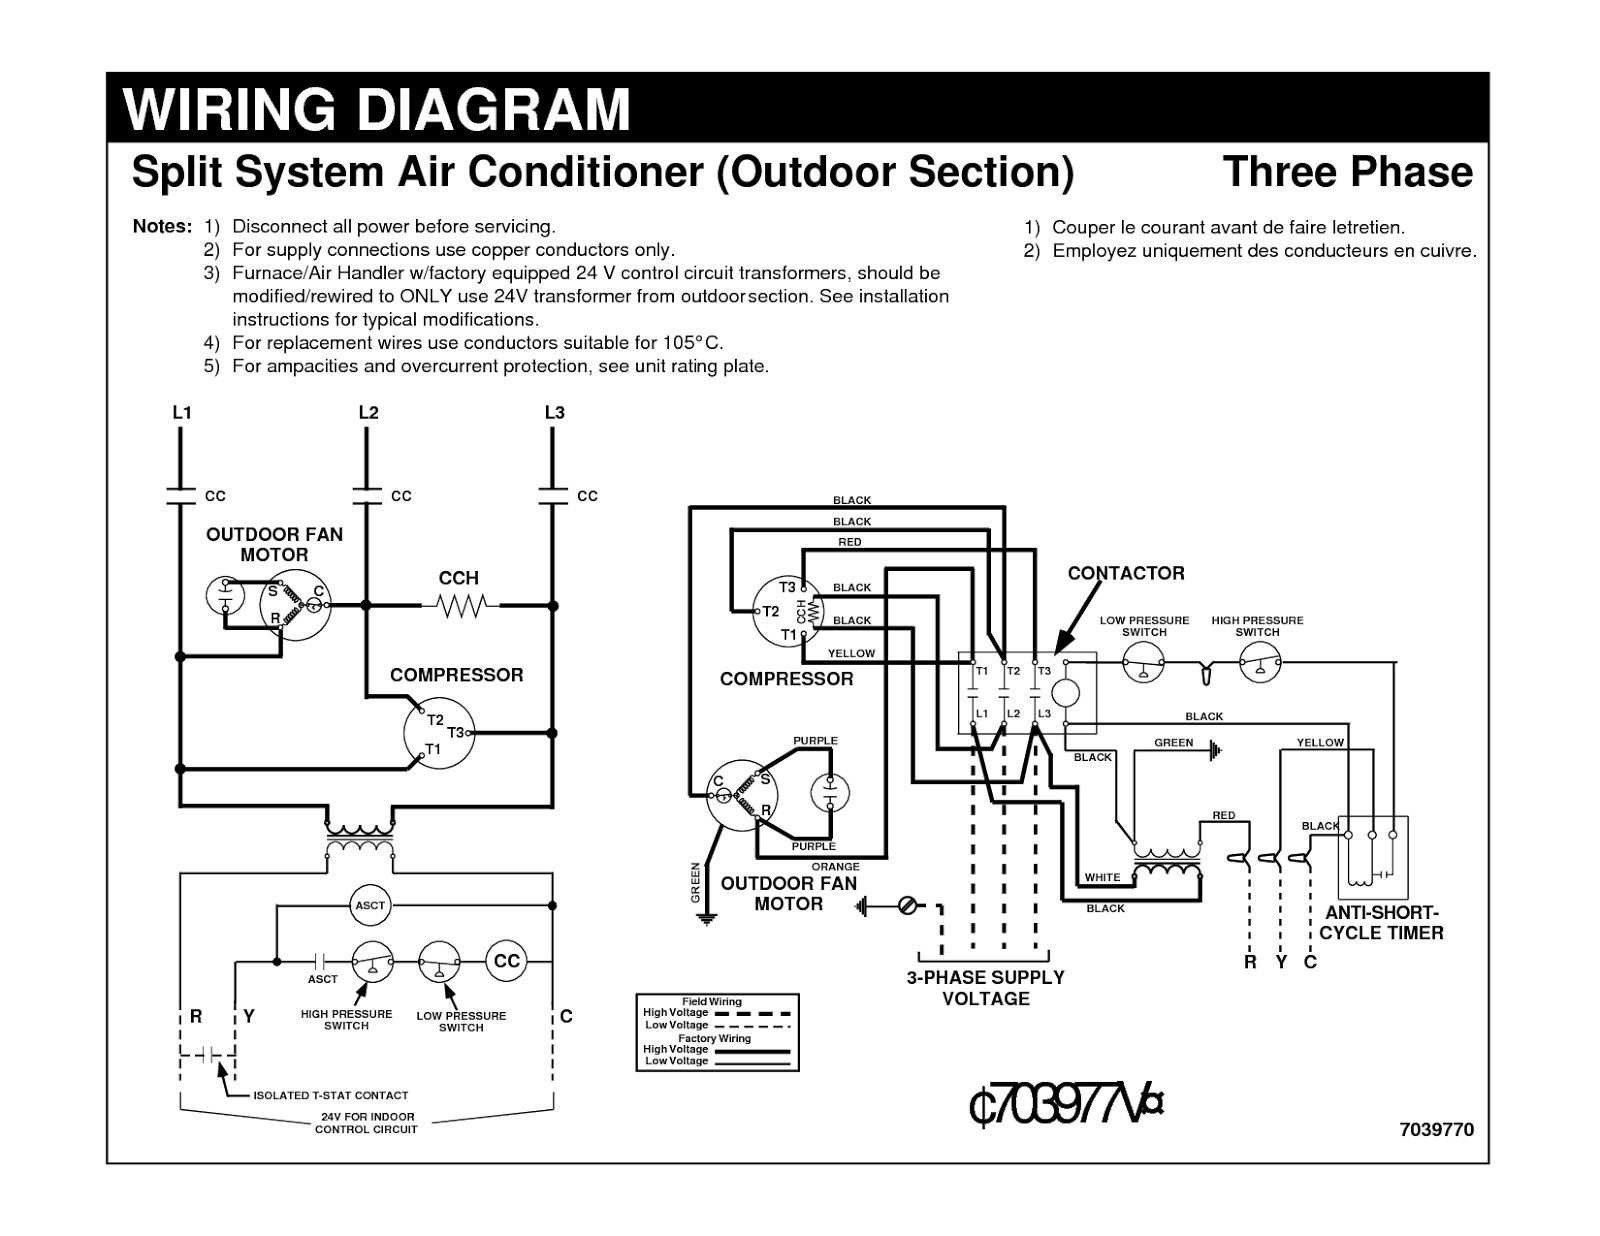 Compressor Wiring Diagram Wire Diagrams Hvac Today Diagram Database